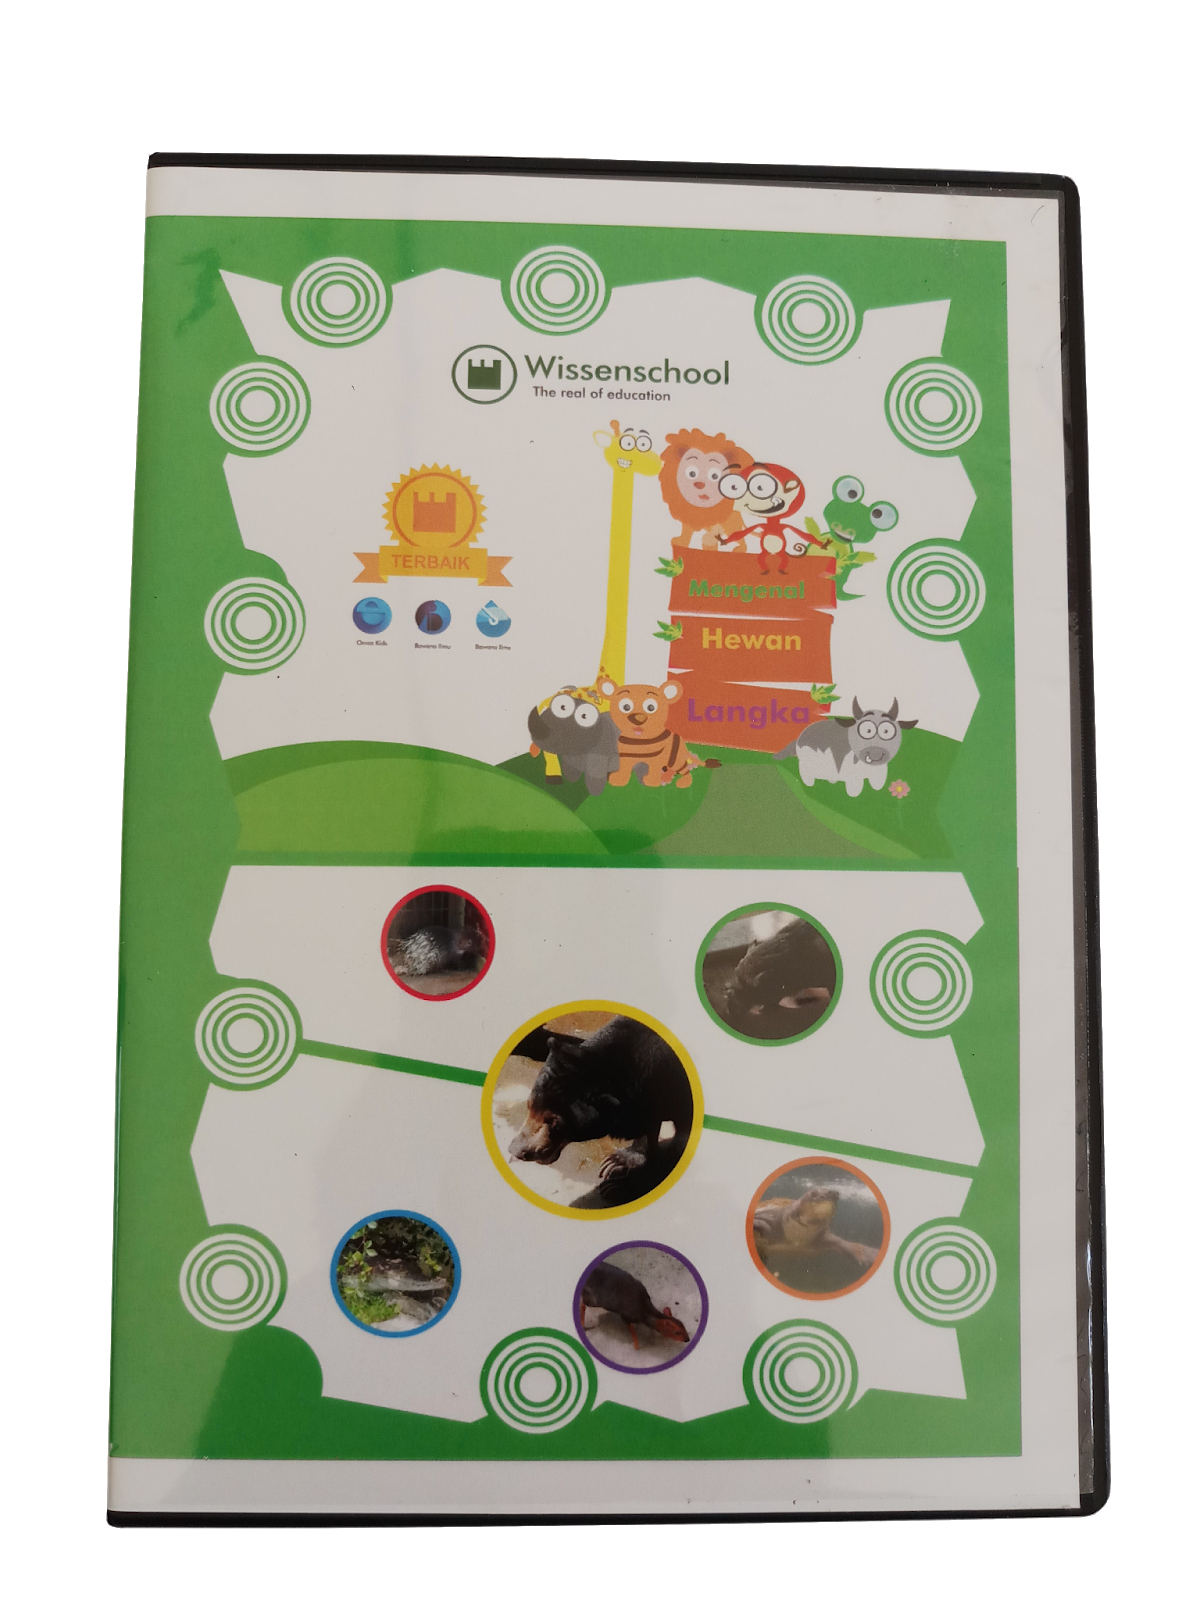 Mari Belajar Mengenal Binatang Langka Pembelajaran untuk anak kecil khususnya taman kanak kanak dalam mengenal binatang atau hewan langka